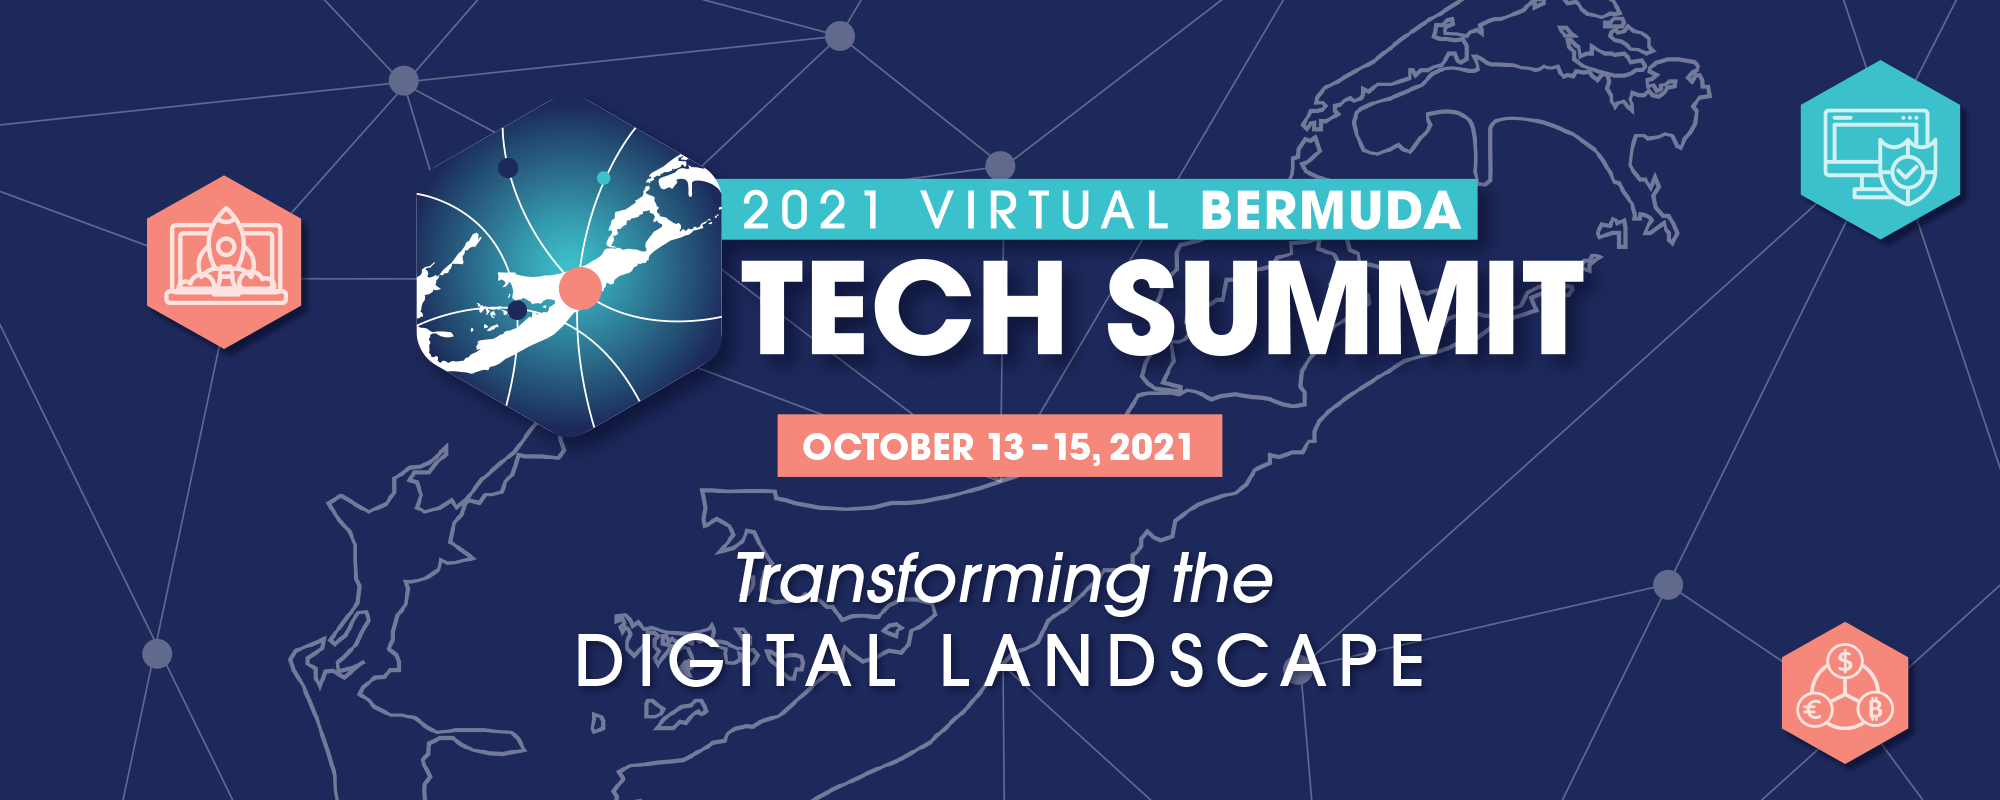 Registration open for third annual Bermuda Tech Summit